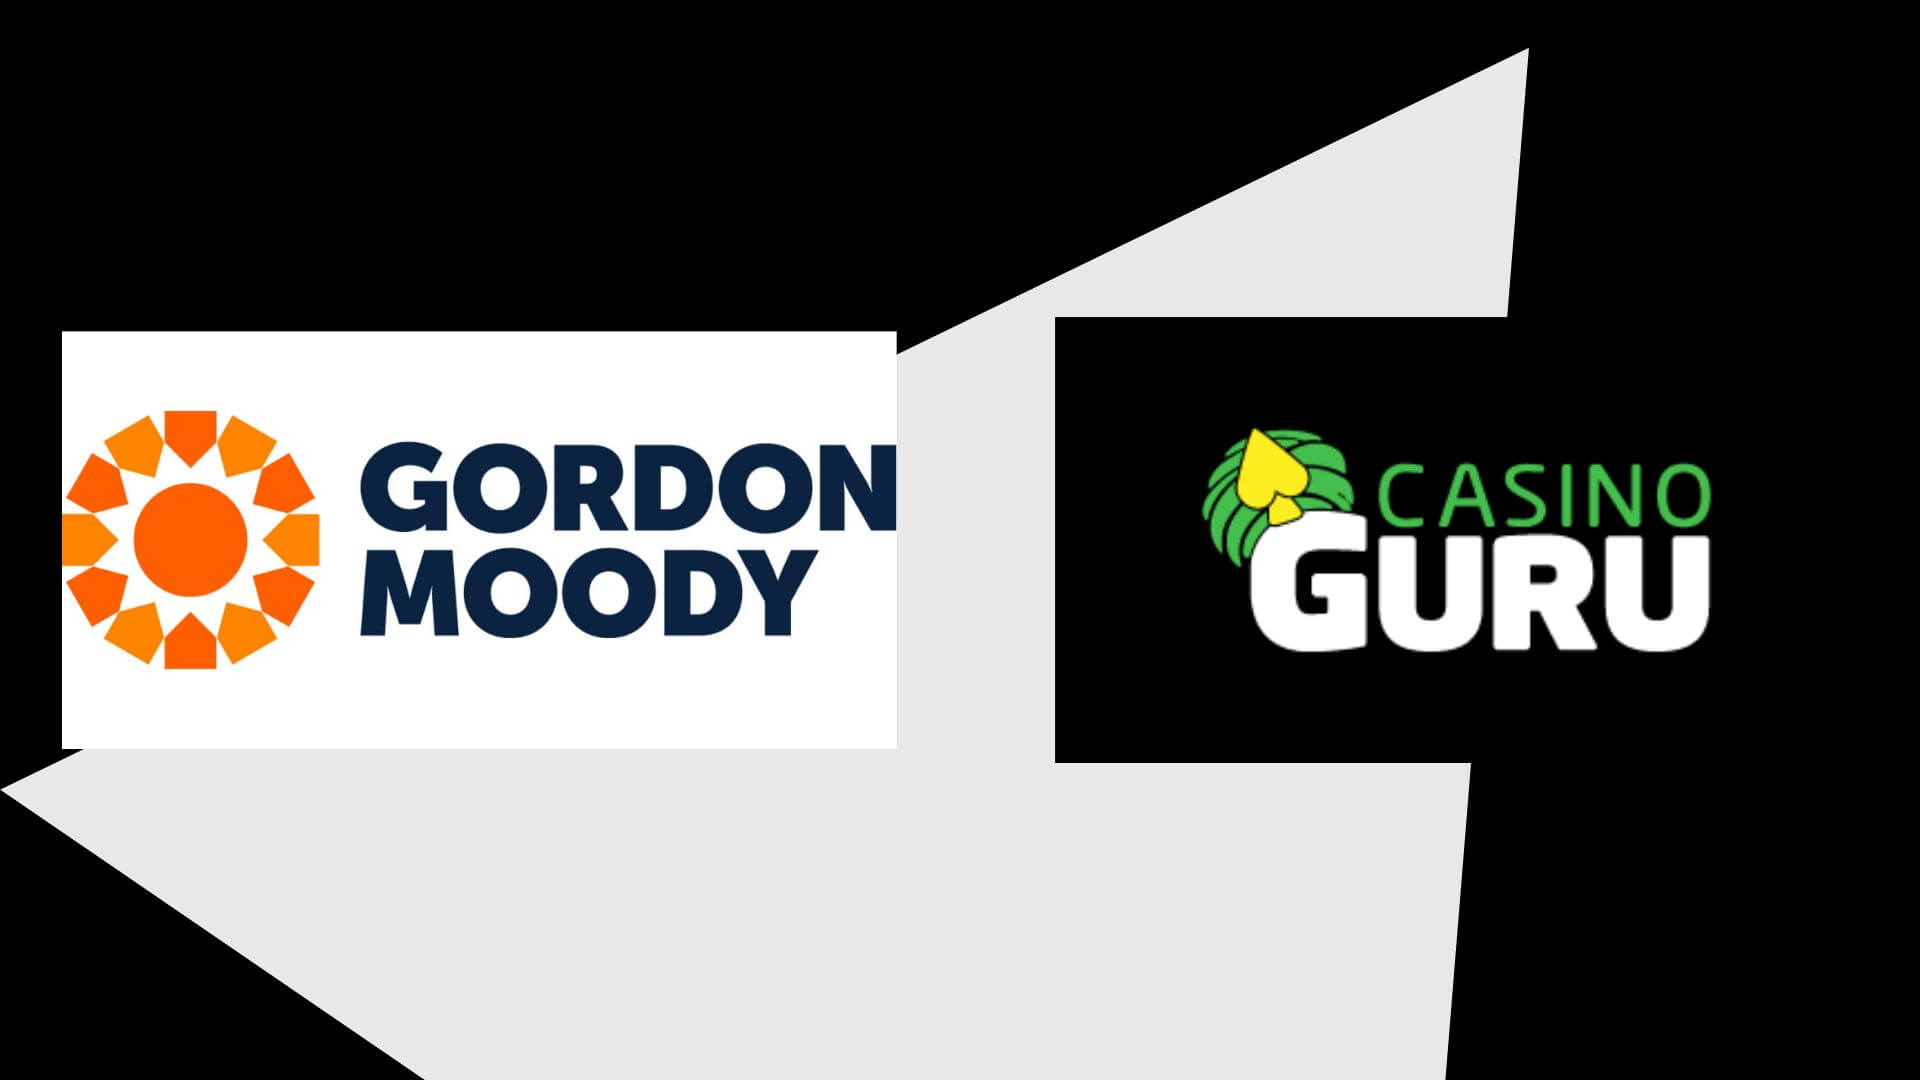 Casino Guru Bekerja Sama Dengan Gordon Moody Untuk Kursus Perjudian yang Lebih Aman